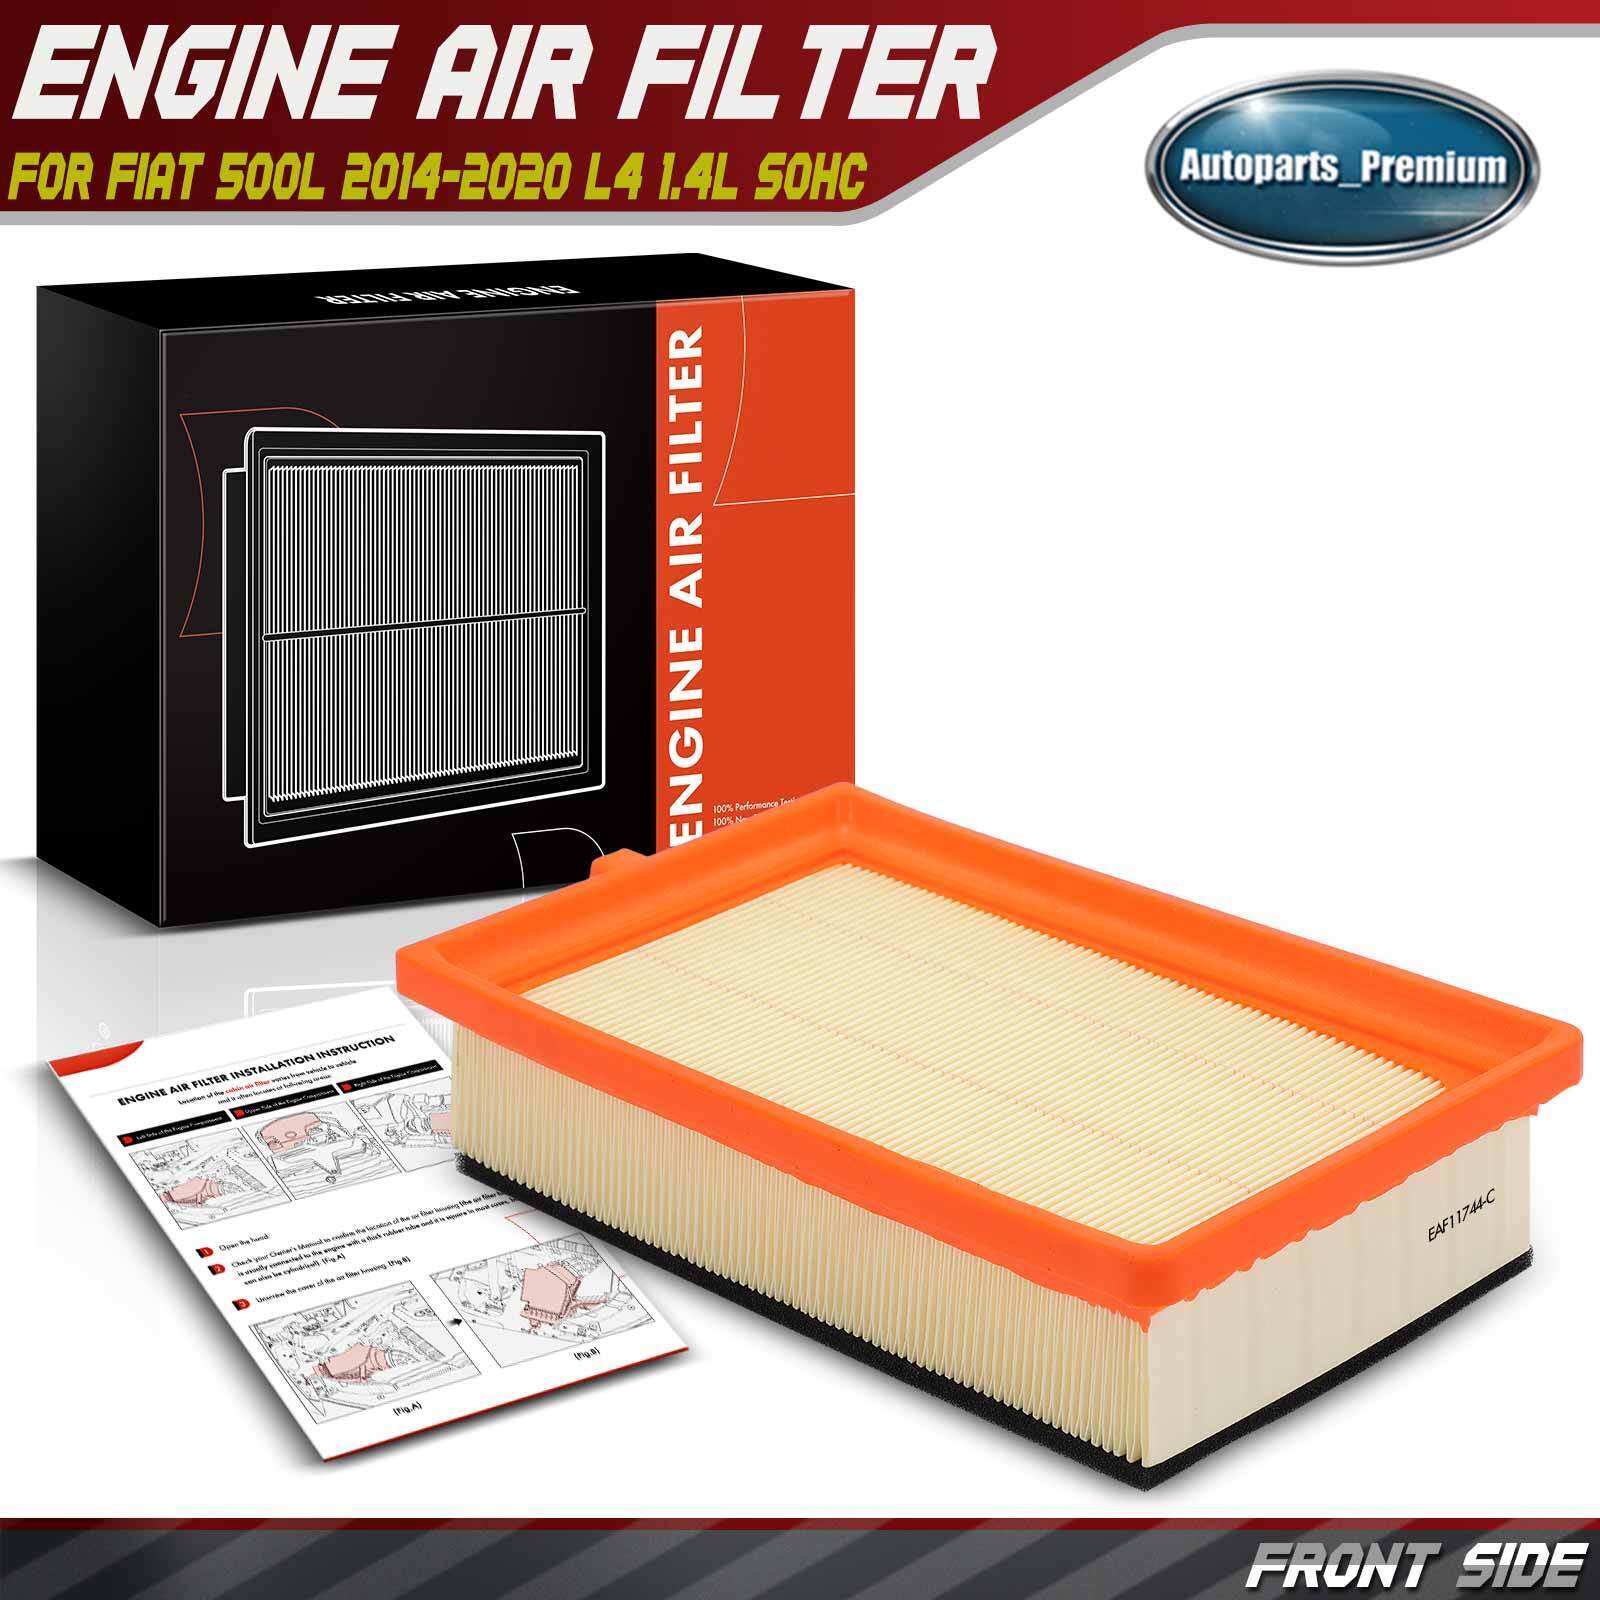 Engine Air Filter for Fiat 500L 2014 2015 2016-2020 L4 1.4L SOHC Flexible Panel